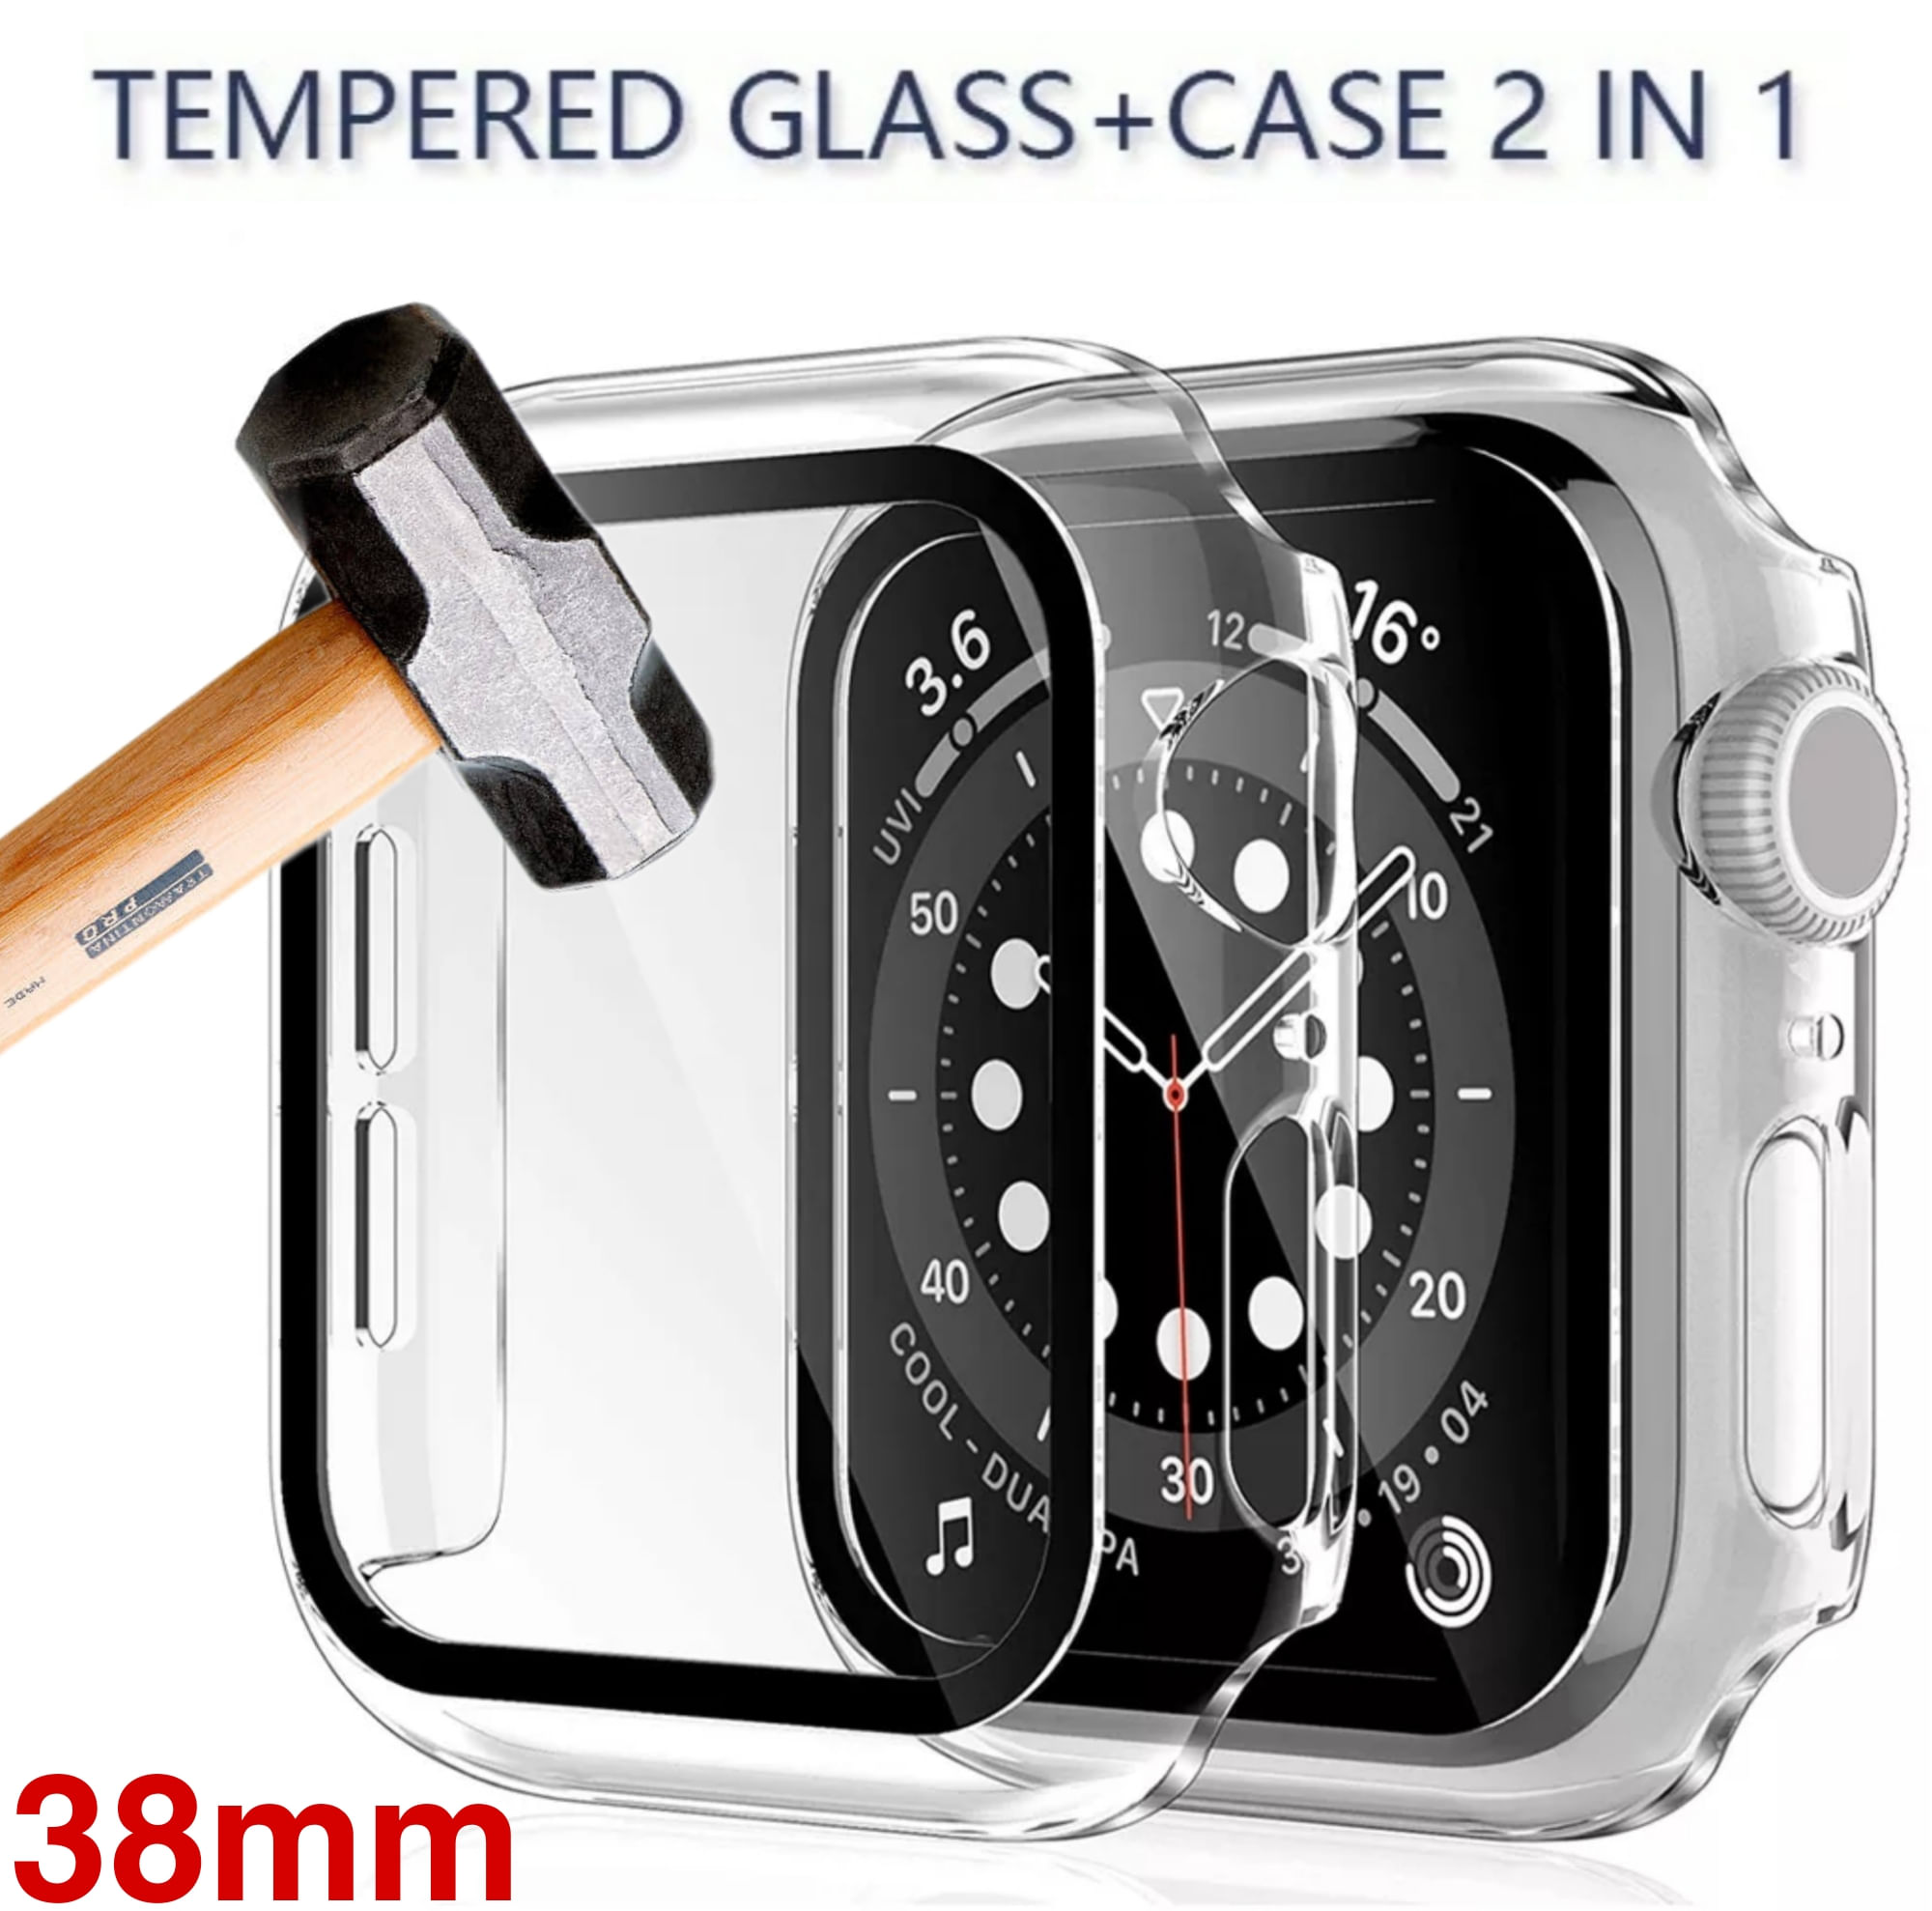 Case Funda 360 para Apple Watch 38mm serie 1 / 2 / 3 - TRANSPARENTE